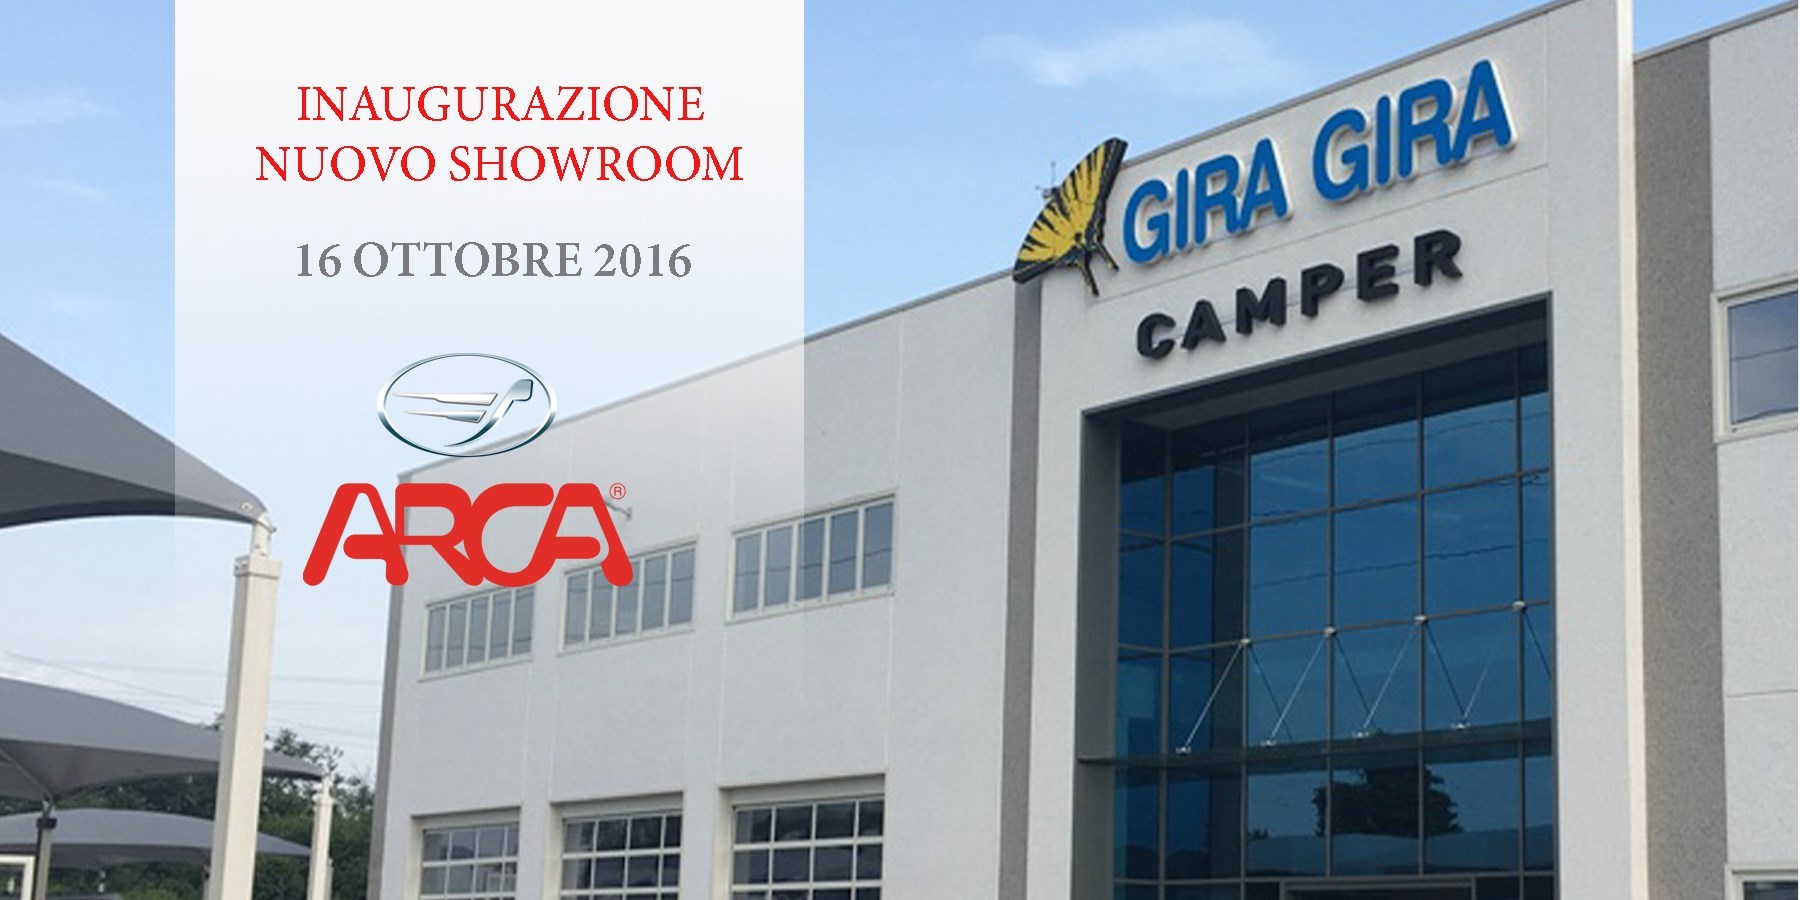 Gira Gira, inaugurazione nuovo showroom